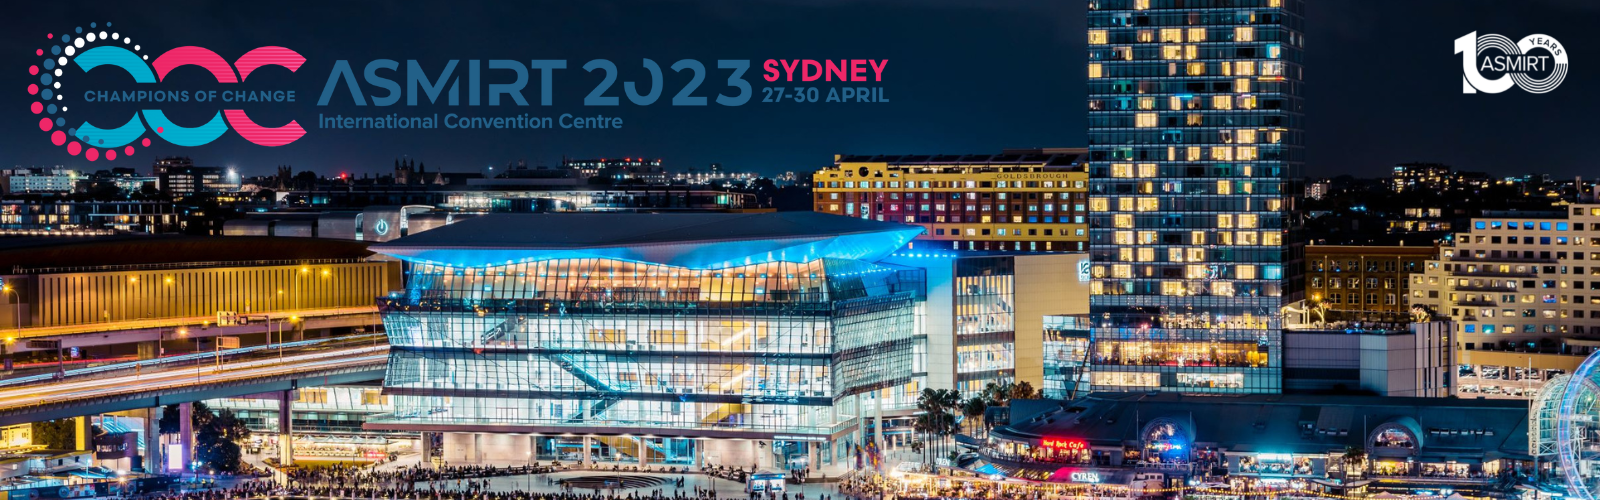 ASMIRT 2023 Conference International Convention Centre Sydney